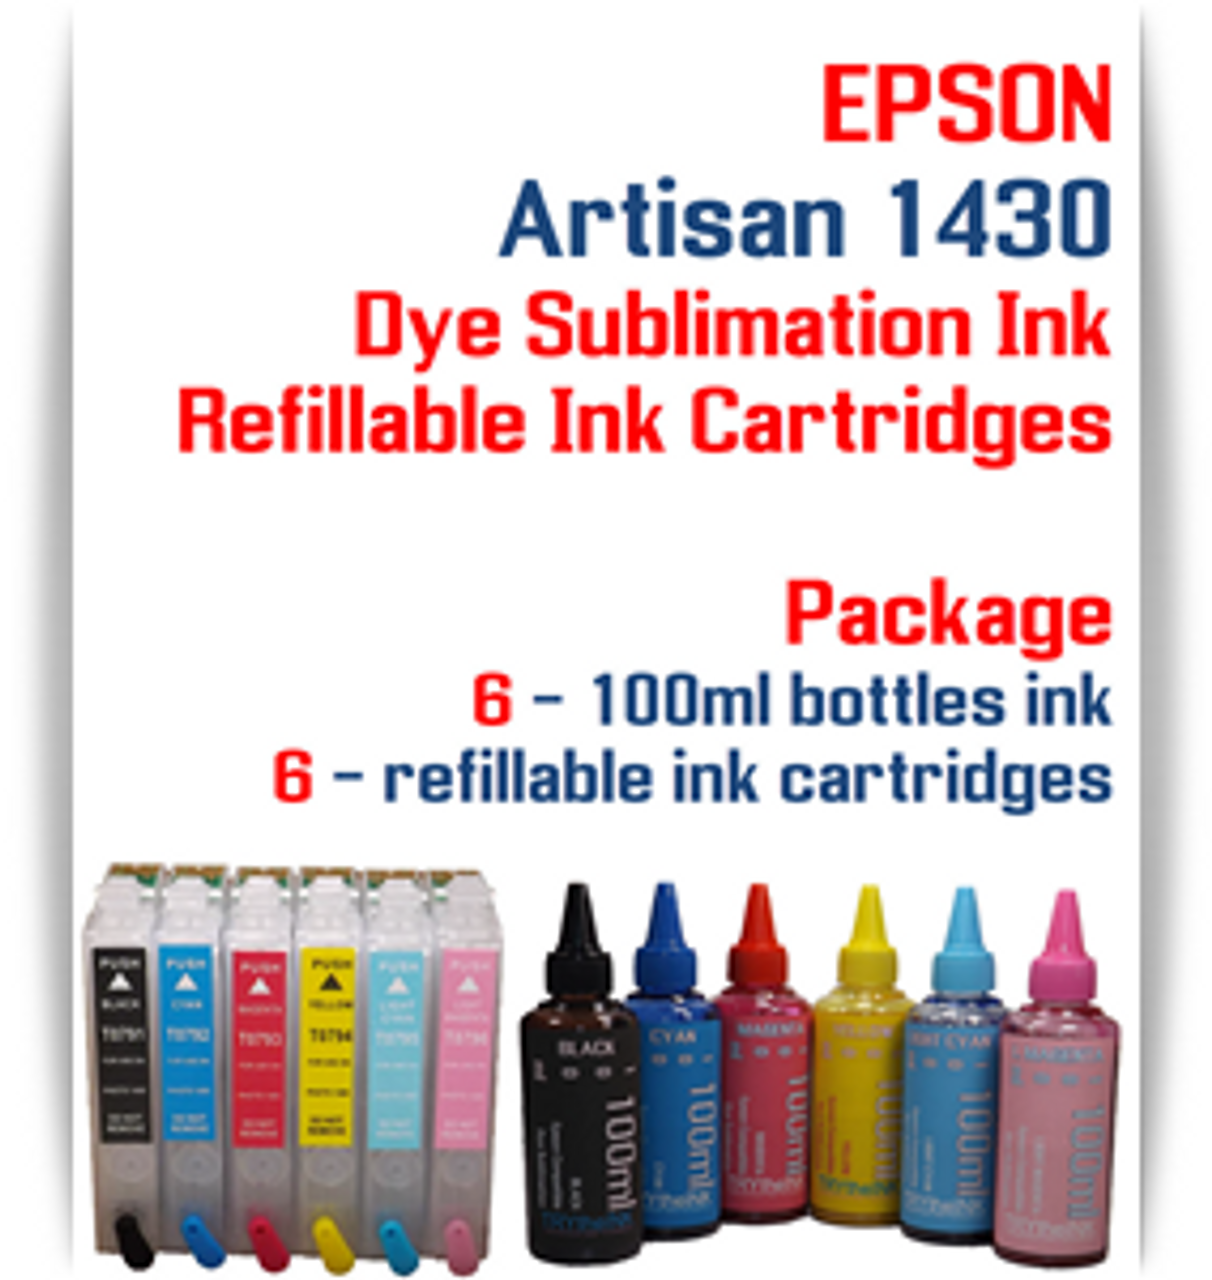 6 Refillable Cartridges & 6 100ml bottles of Sublimation Ink Package Epson Artisan 1430 printer ink cartridges